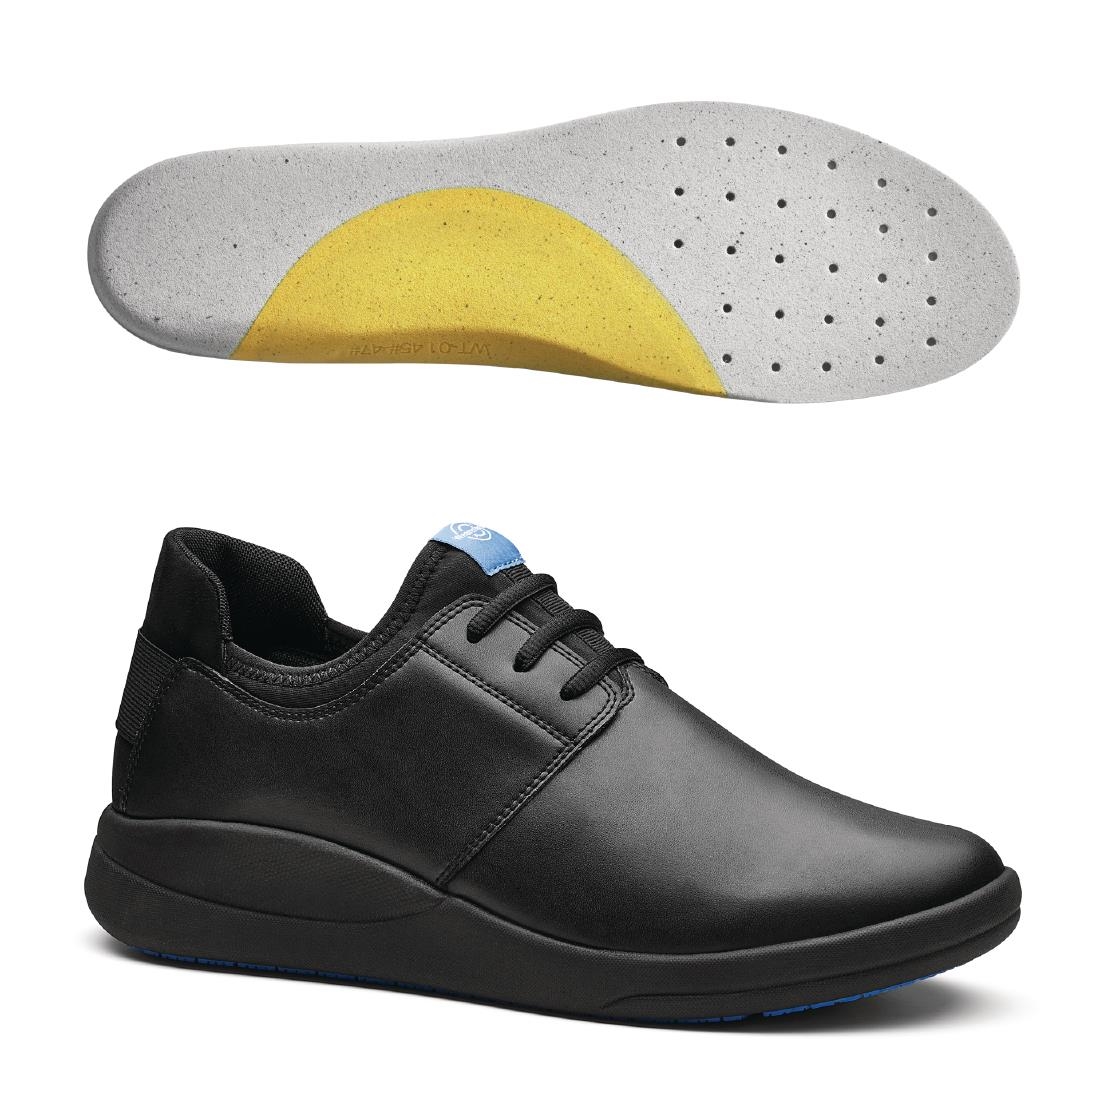 WearerTech Relieve Shoe Black with Soft Insoles Size 39-40